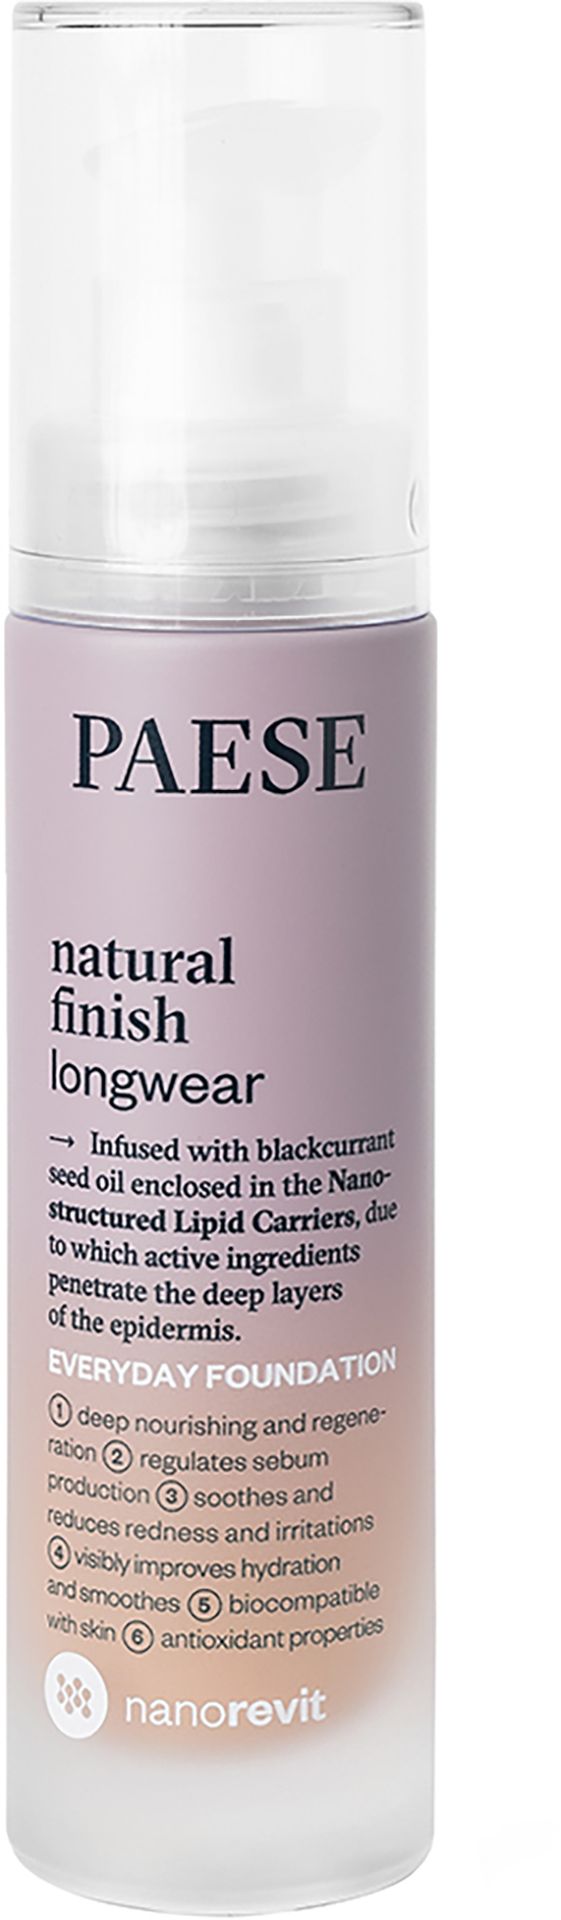 PAESE Nanorevit Natural Finish Longwear Everyday Foundation nr 1,5 NUDE 35ml